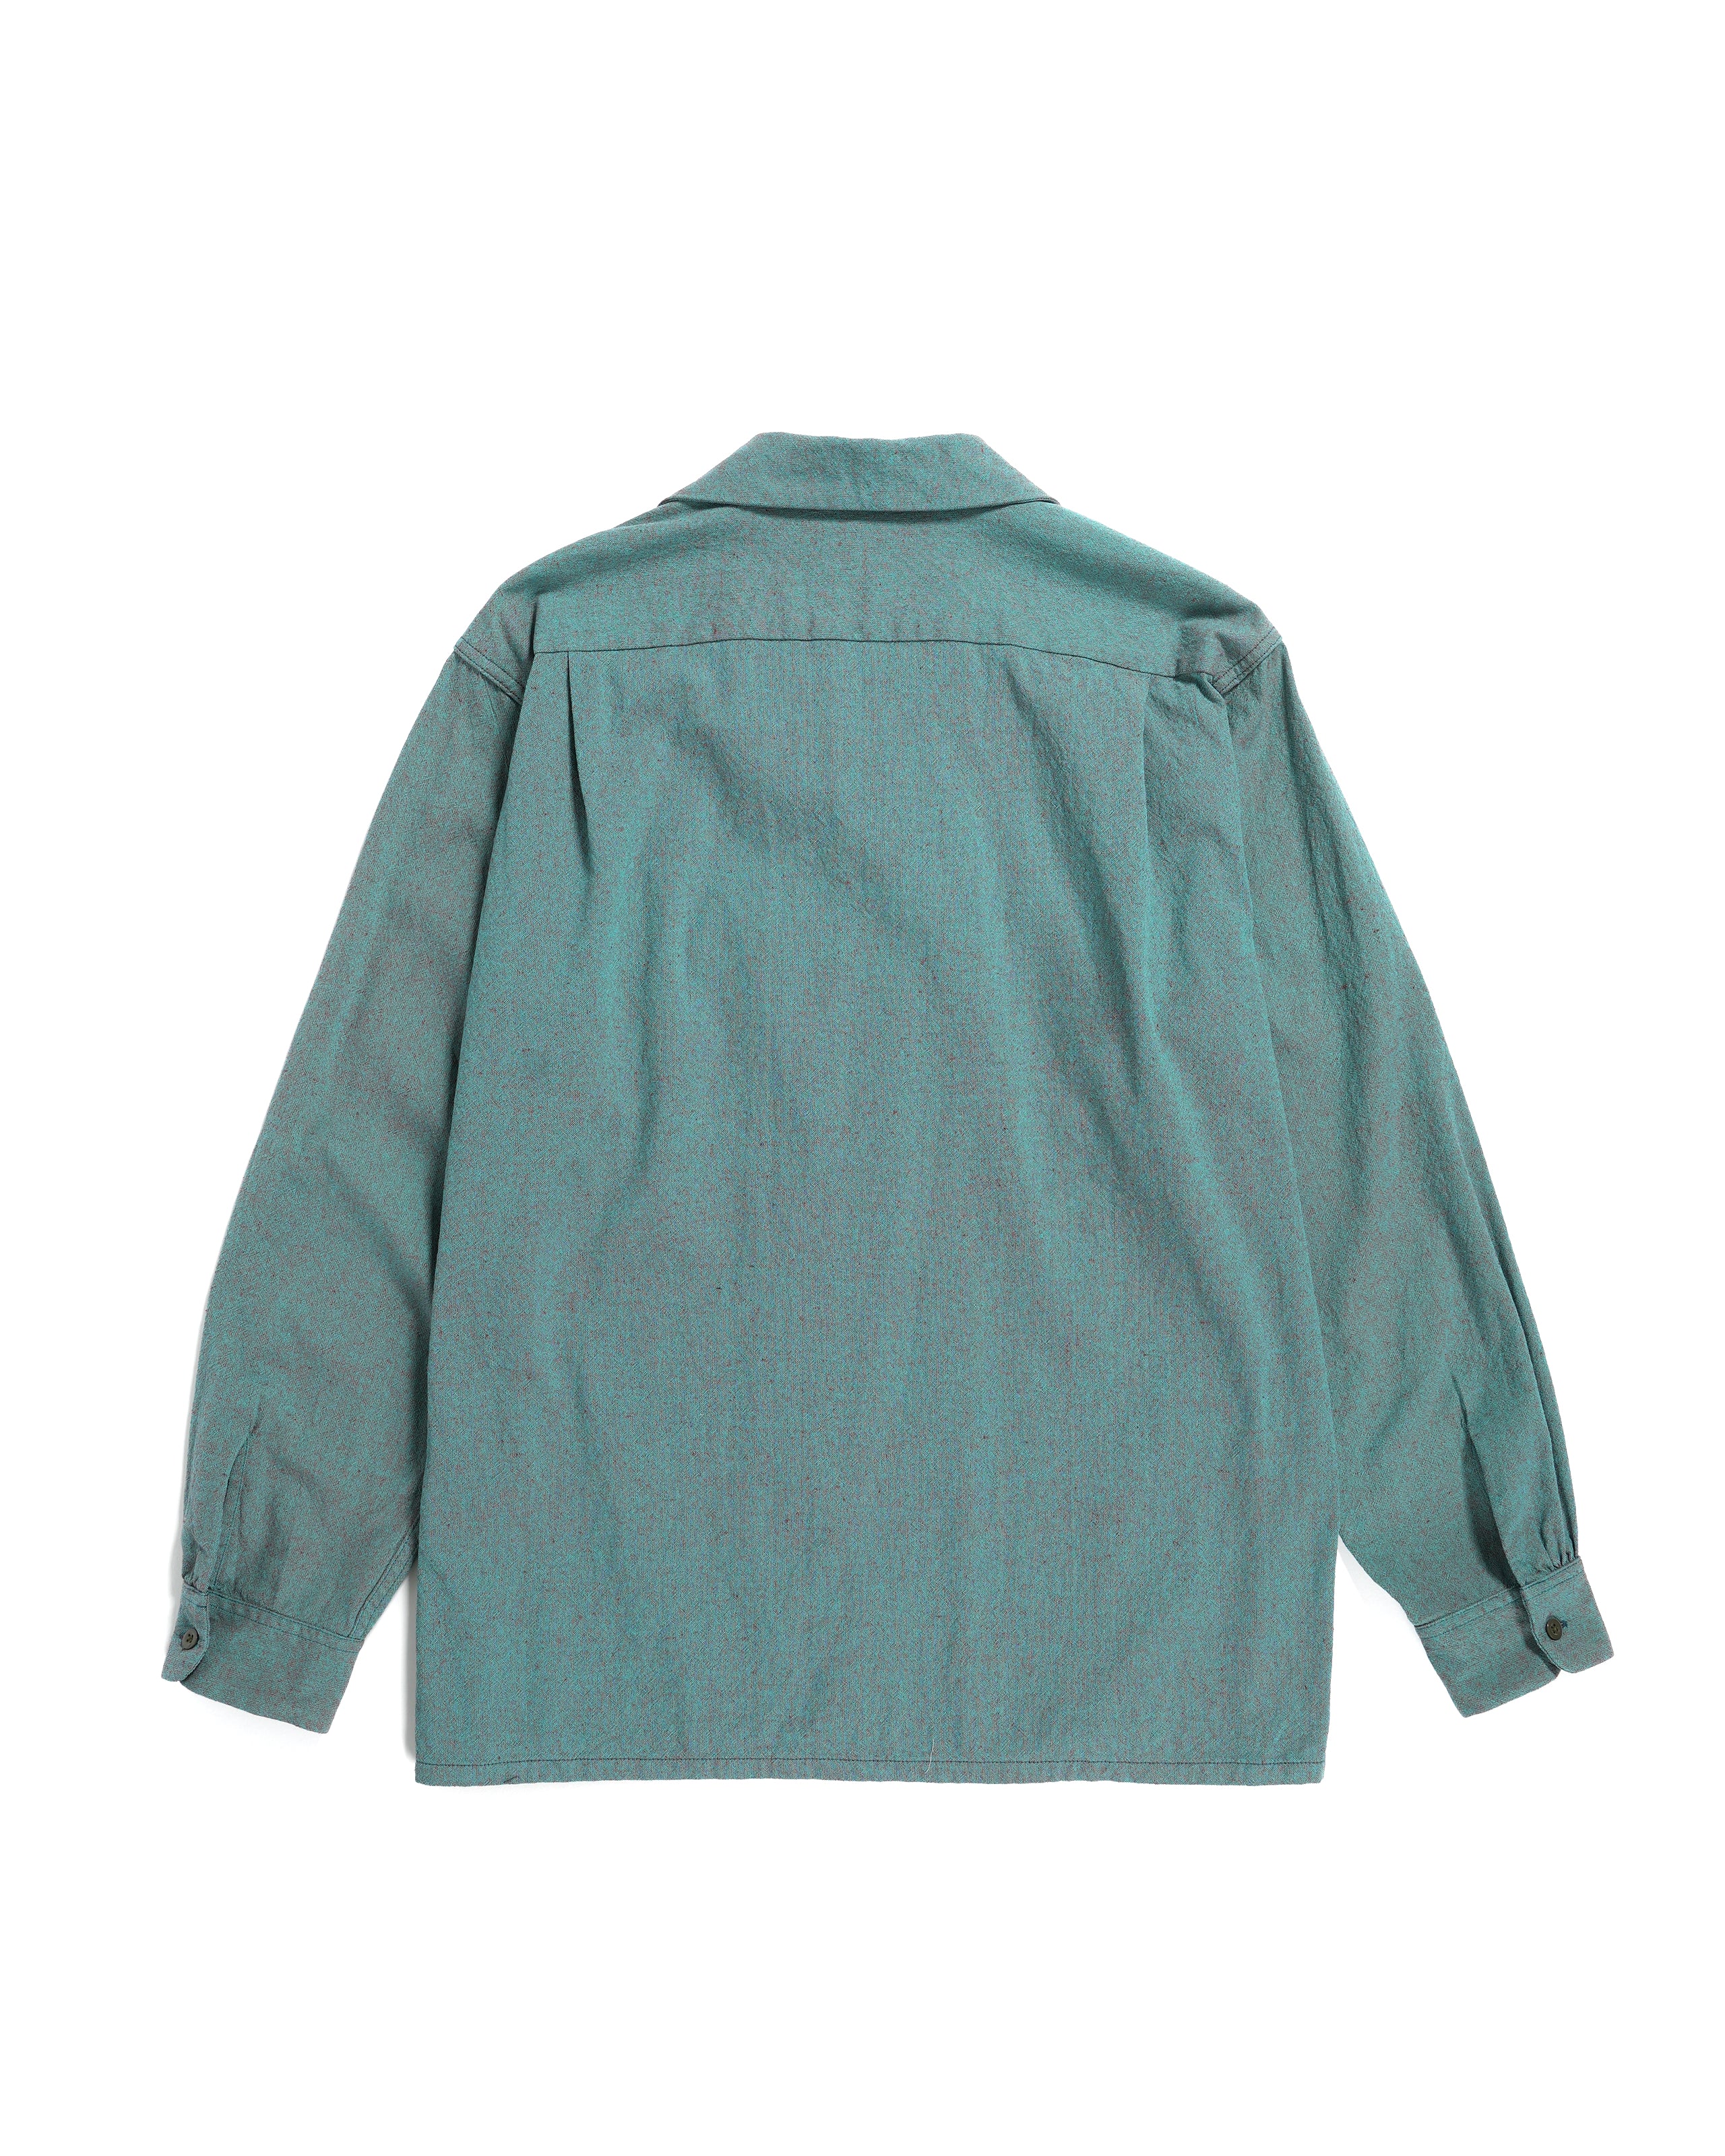 Classic Shirt - Jade Cotton Iridescent Oxford